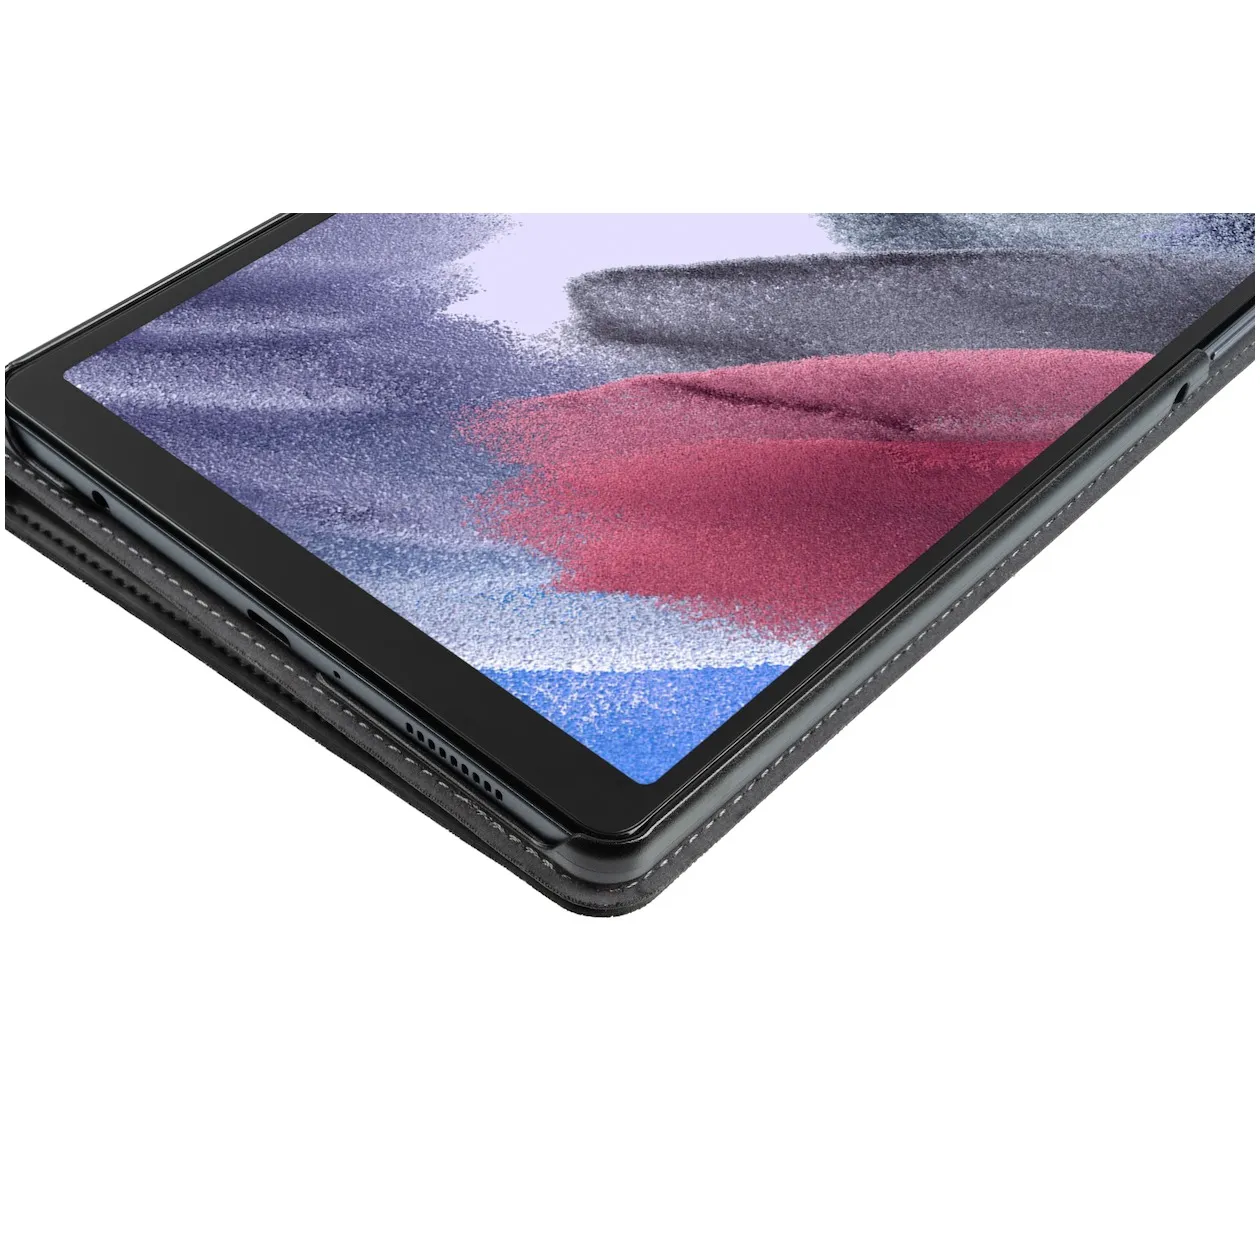 Gecko Easy-Click 2.0 Book Cover voor Galaxy Tab A7 Lite Zwart